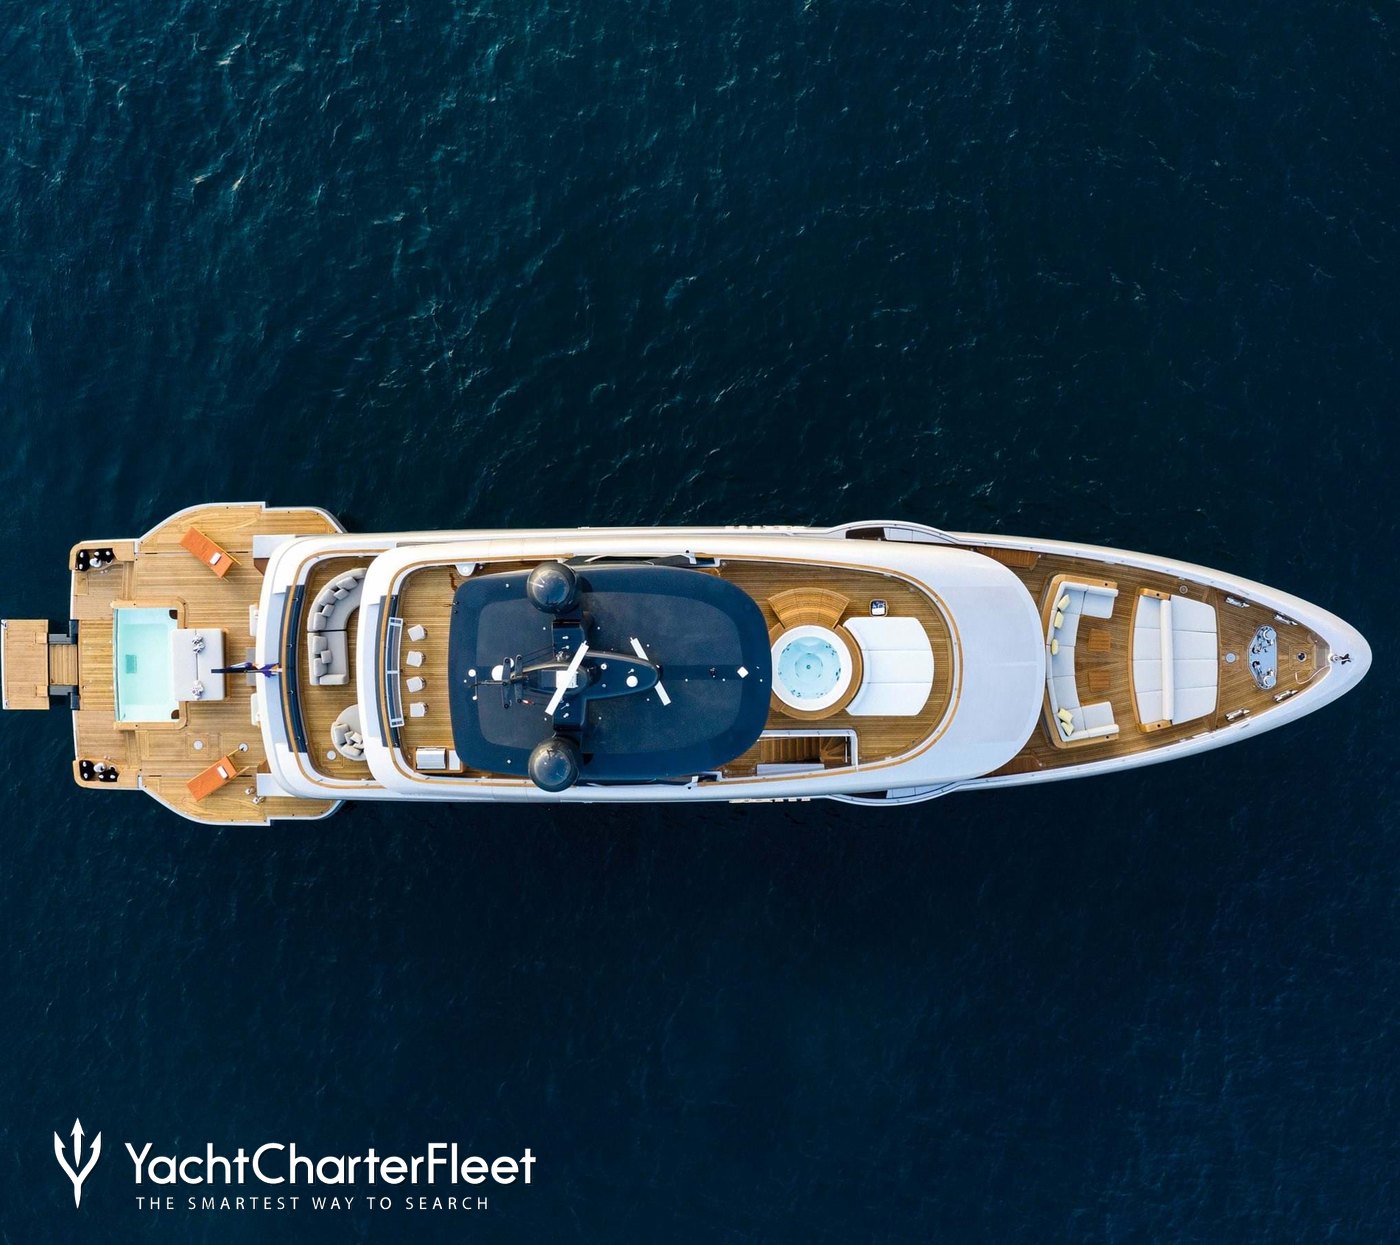 Brand new Benetti yacht REBECA joins the charter fleet | YachtCharterFleet